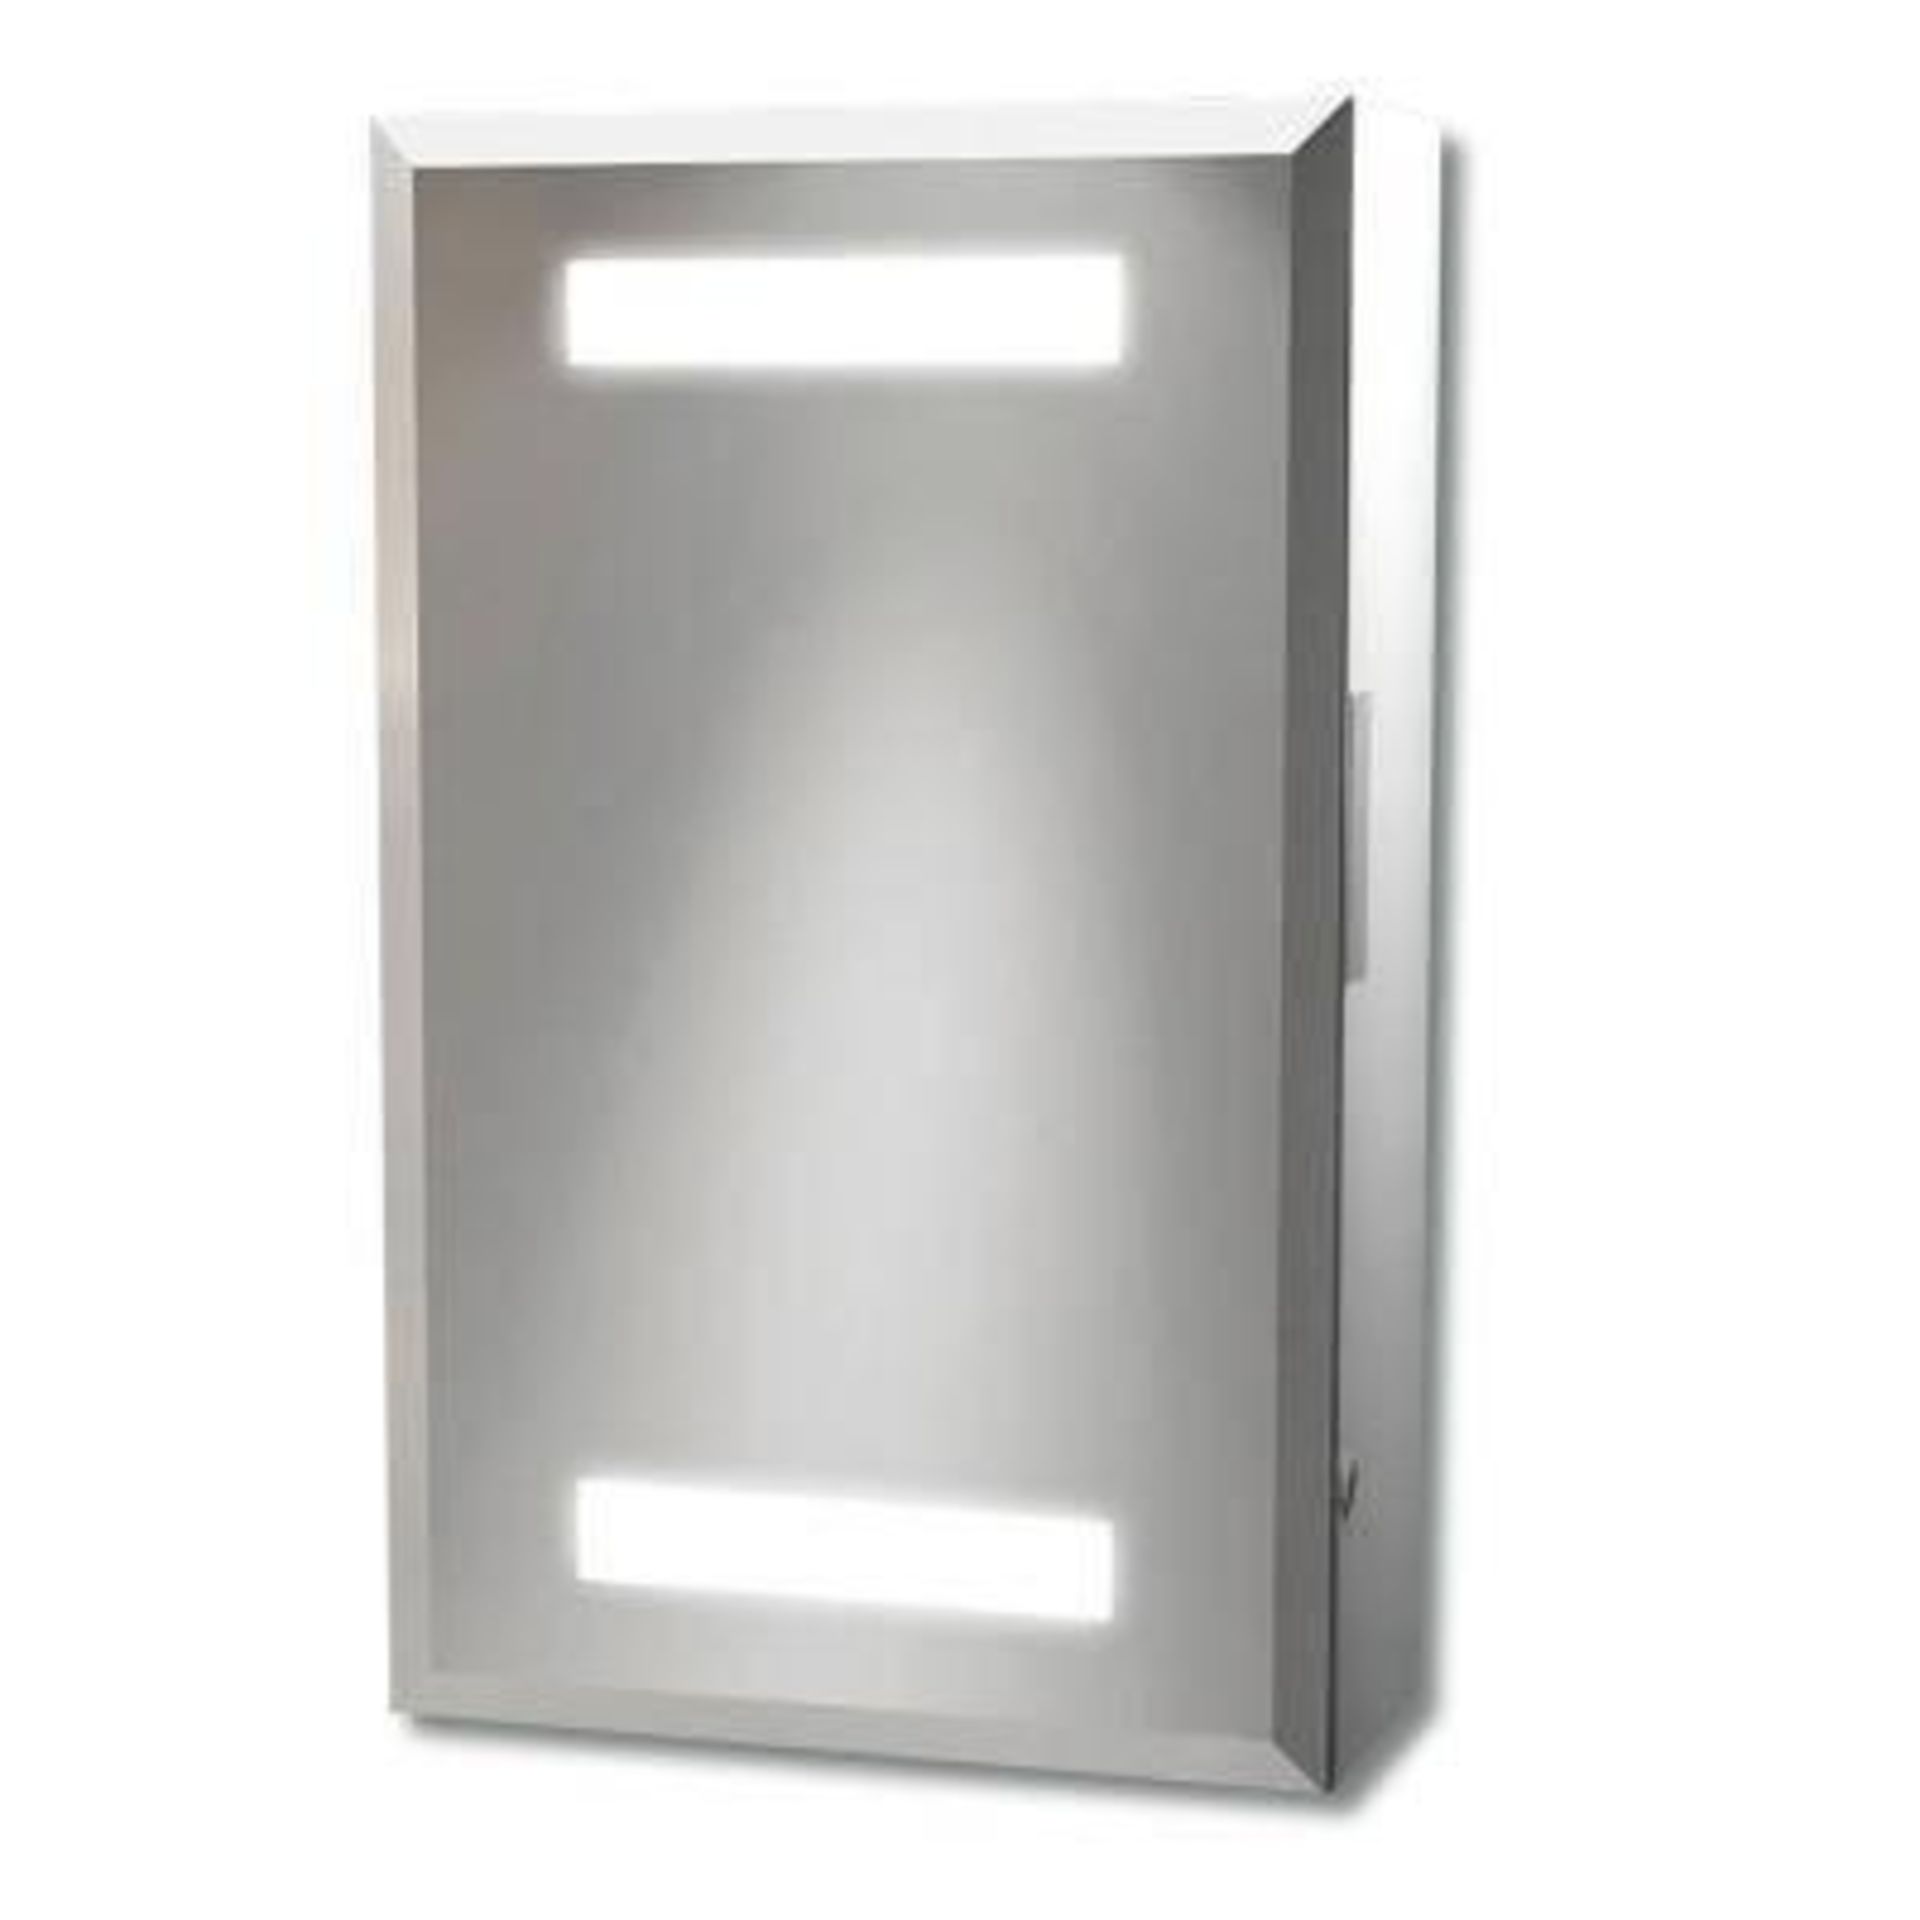 Pallet Job Lot Of 22 x Synergy Single Door Aluminium LED Mirrored Bathroom Cabinets - Contemporary M